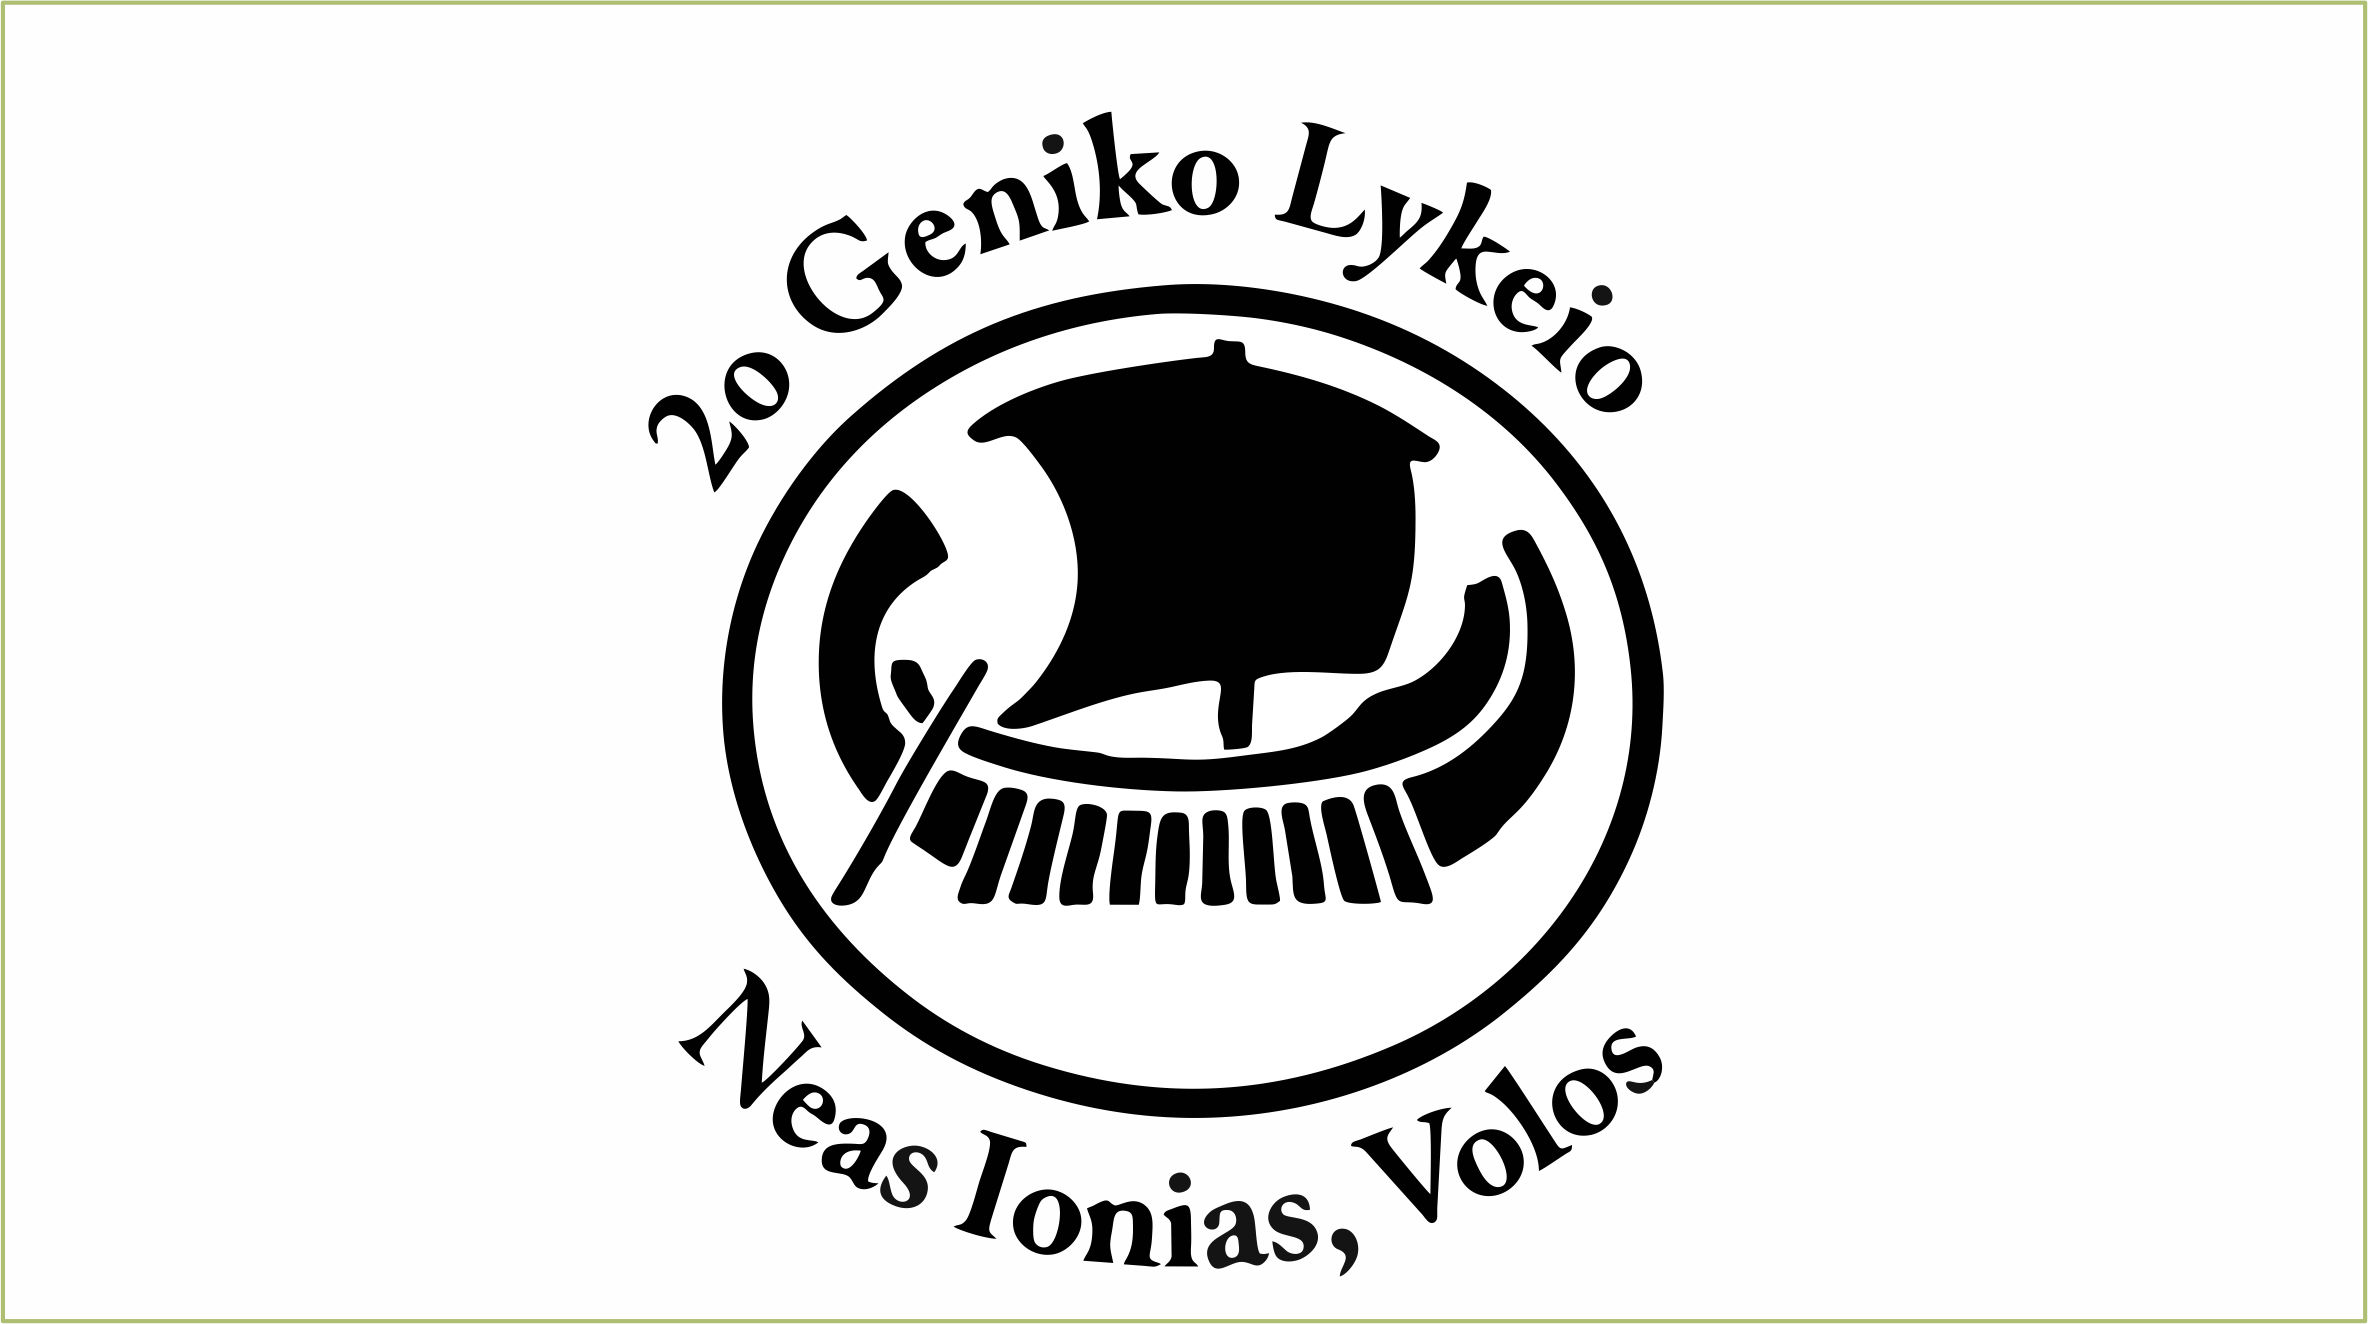 2o Geniko Lykeio Neas Ionias: Student´s training advances and first dissemination activities